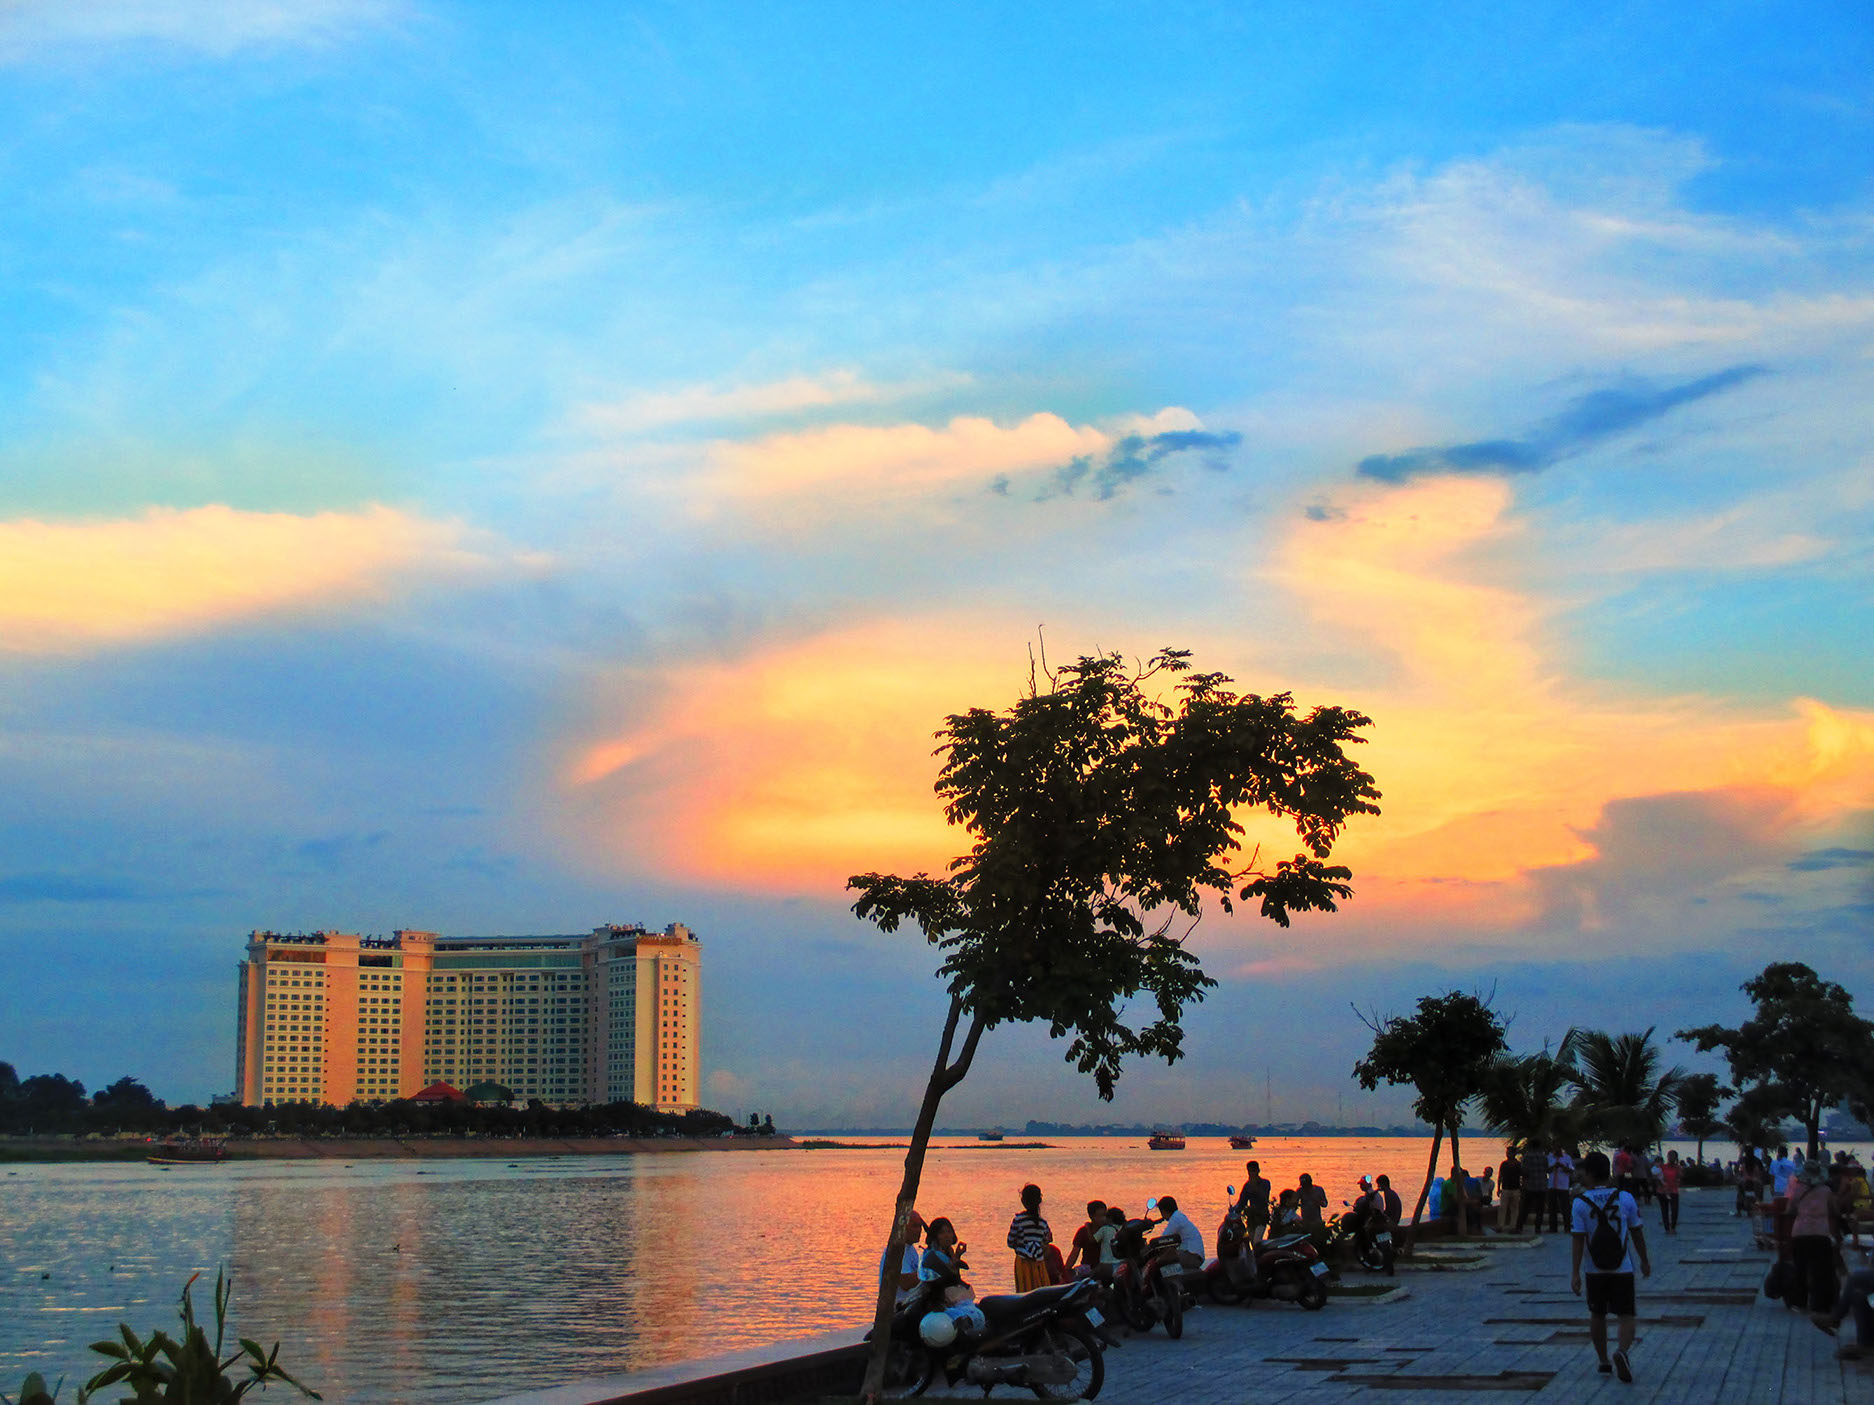 Sunset at Mekong River in Phnom Penh